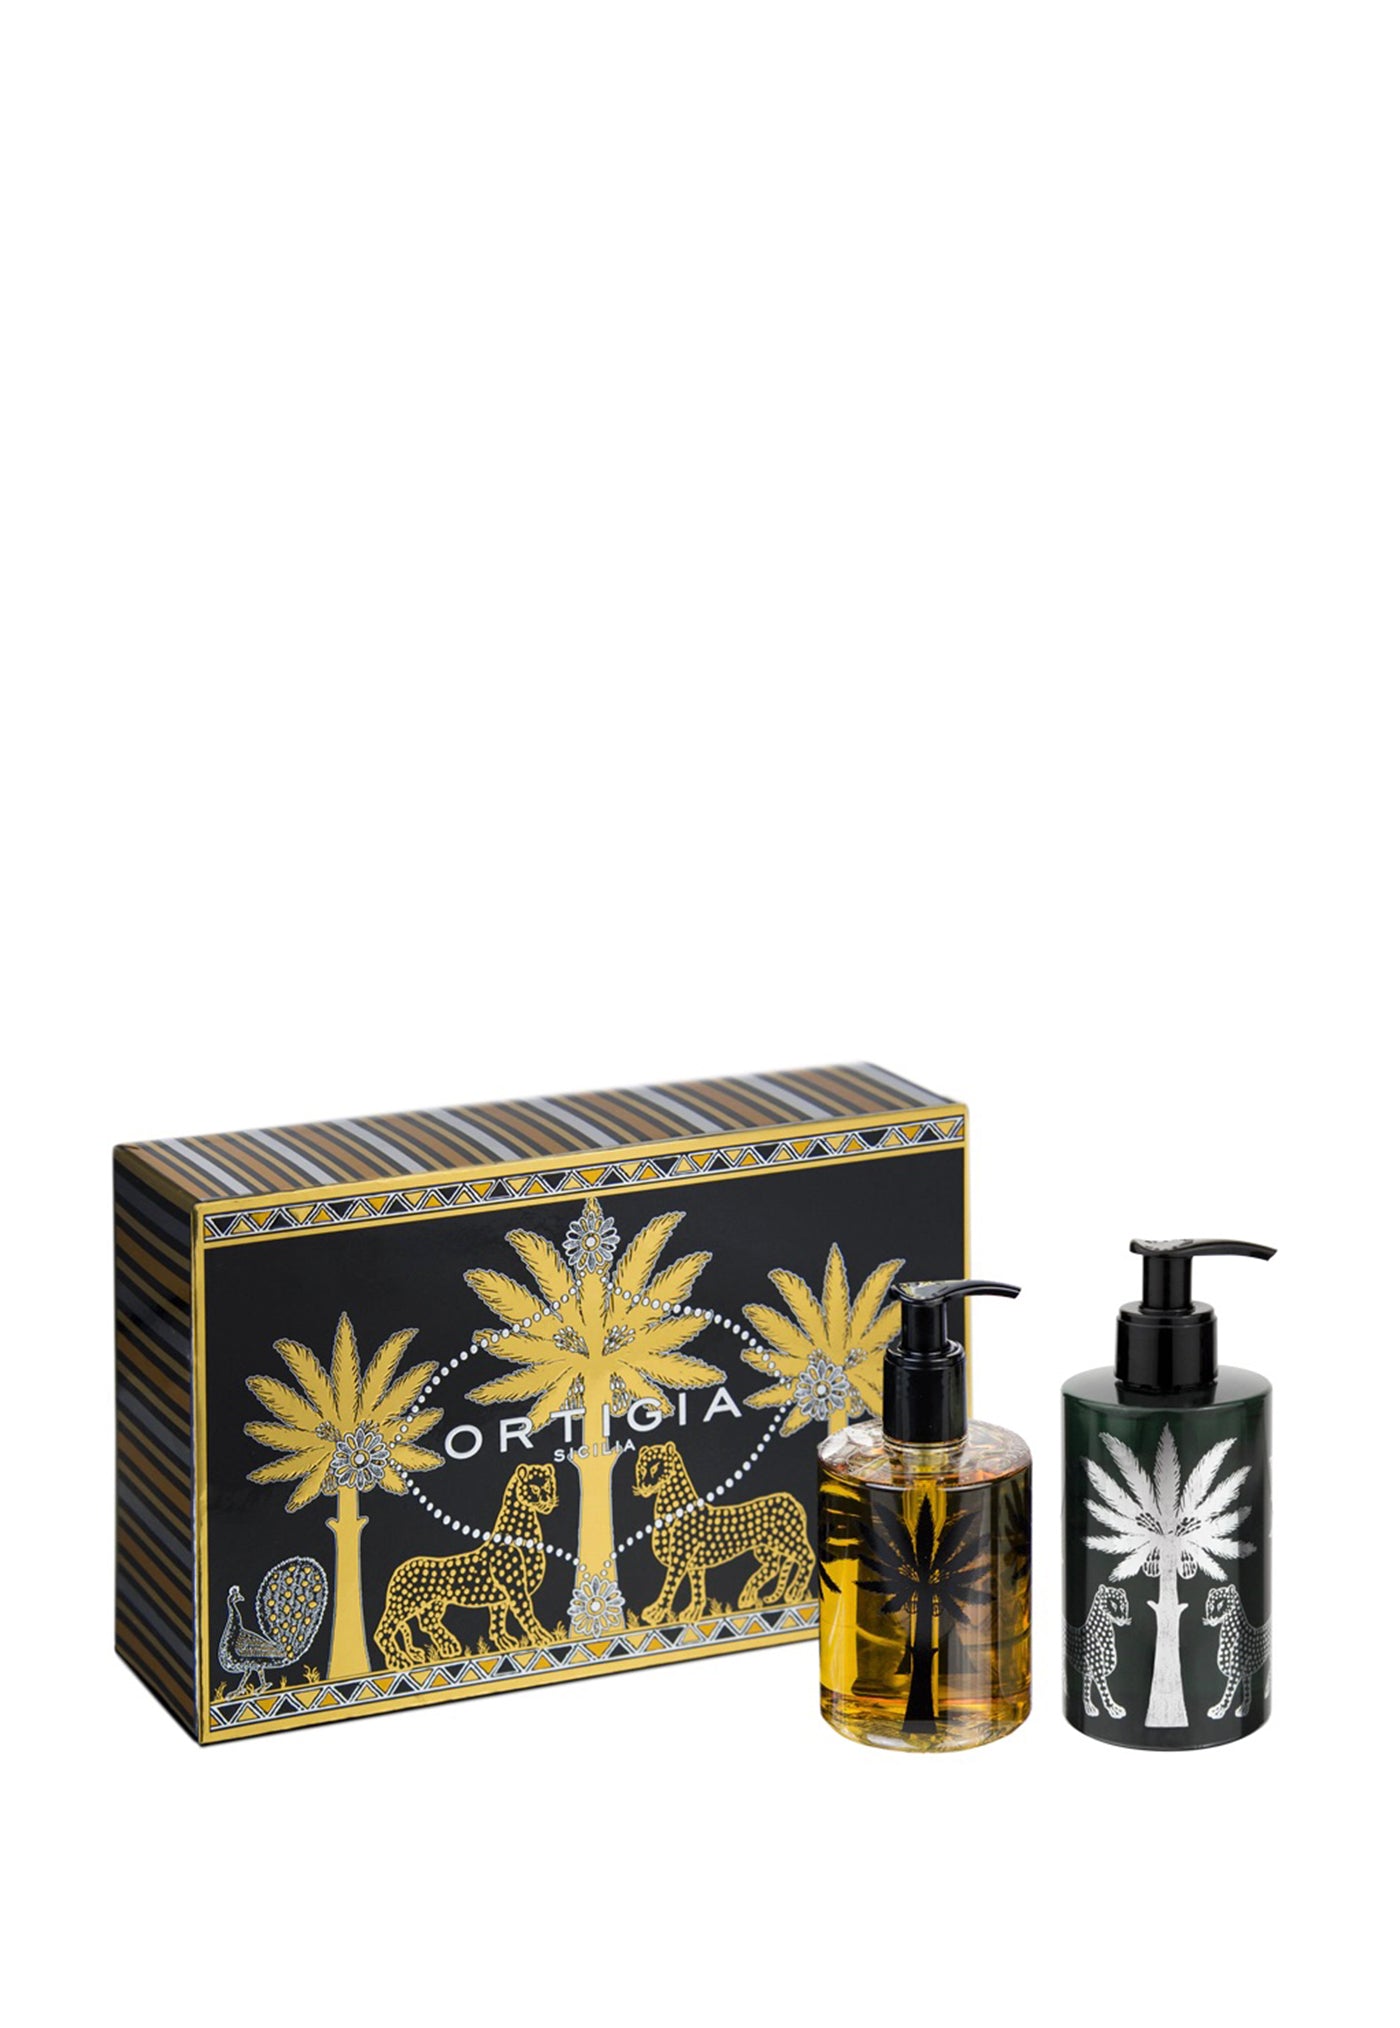 Ambra Nera Liquid Soap & Body Cream Gift Set sold by Angel Divine